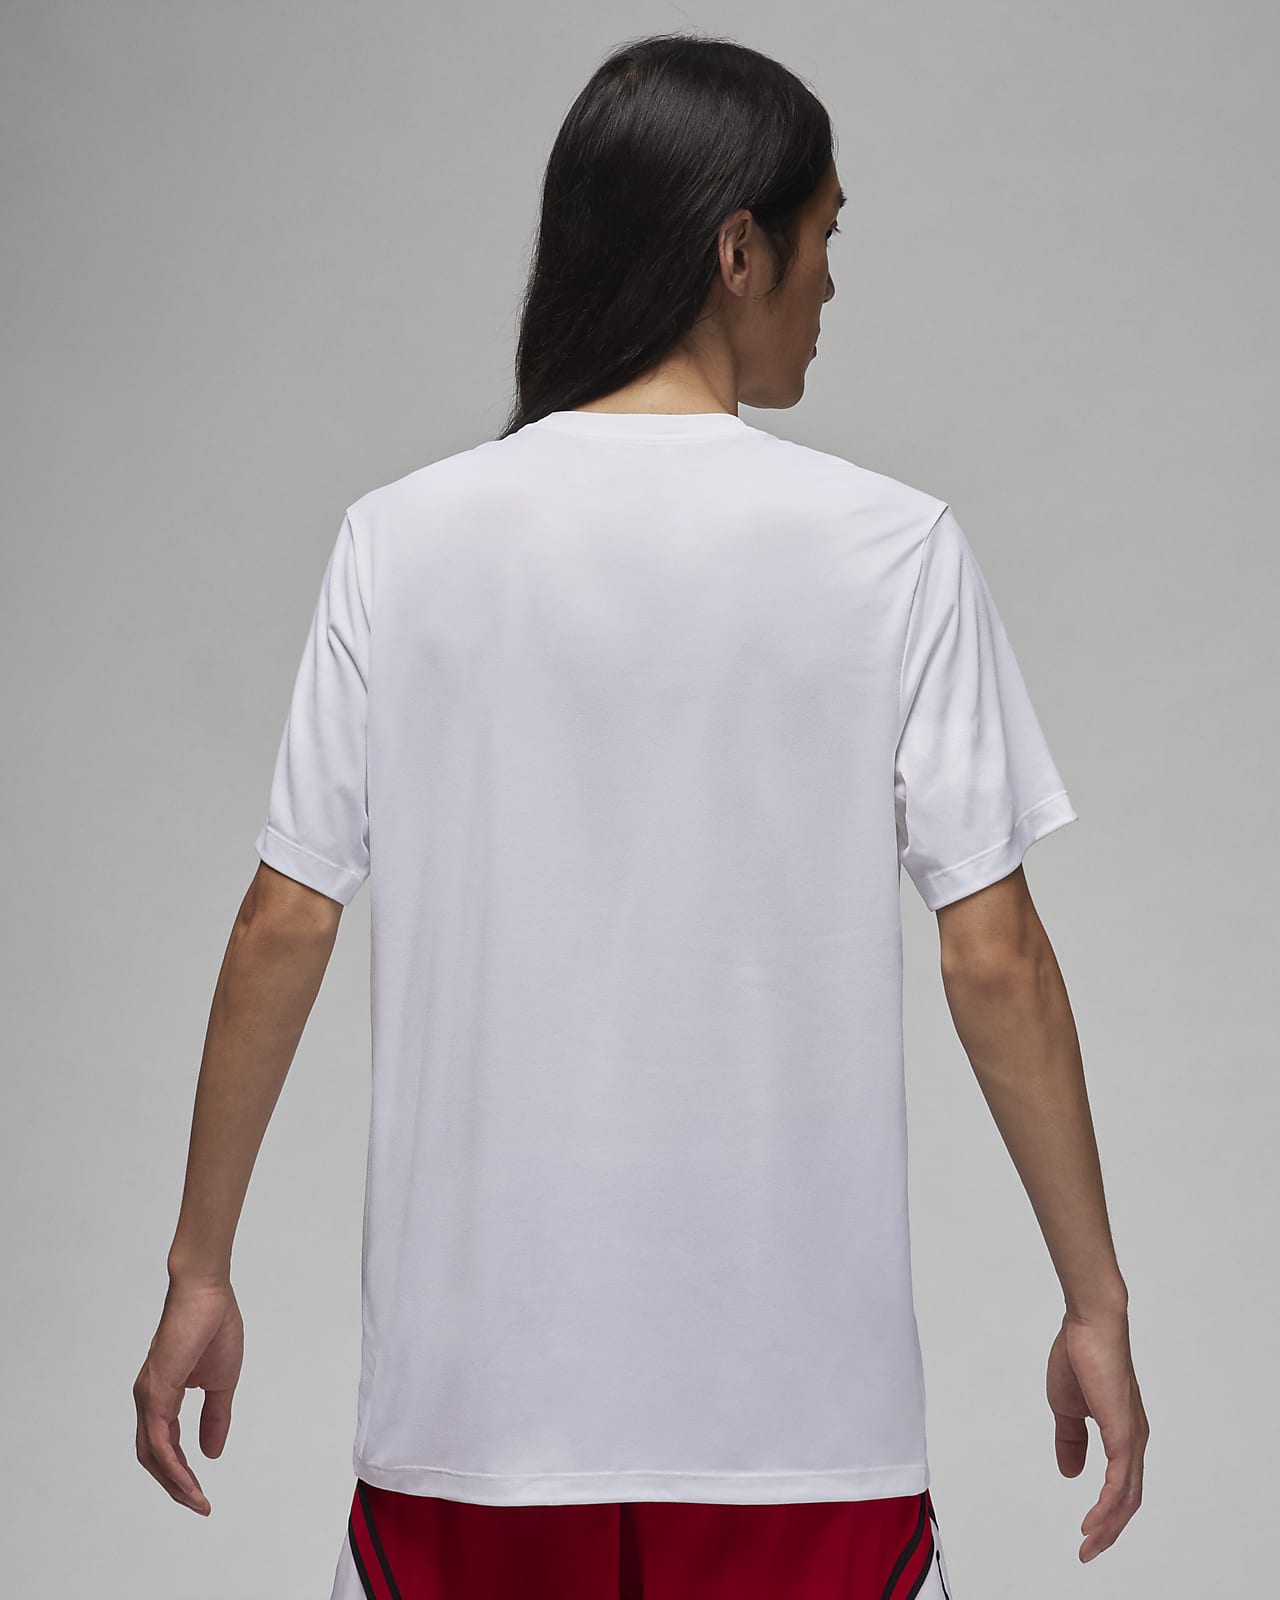 Nike Men's Dri-Fit Basketball T-Shirt, Medium, White